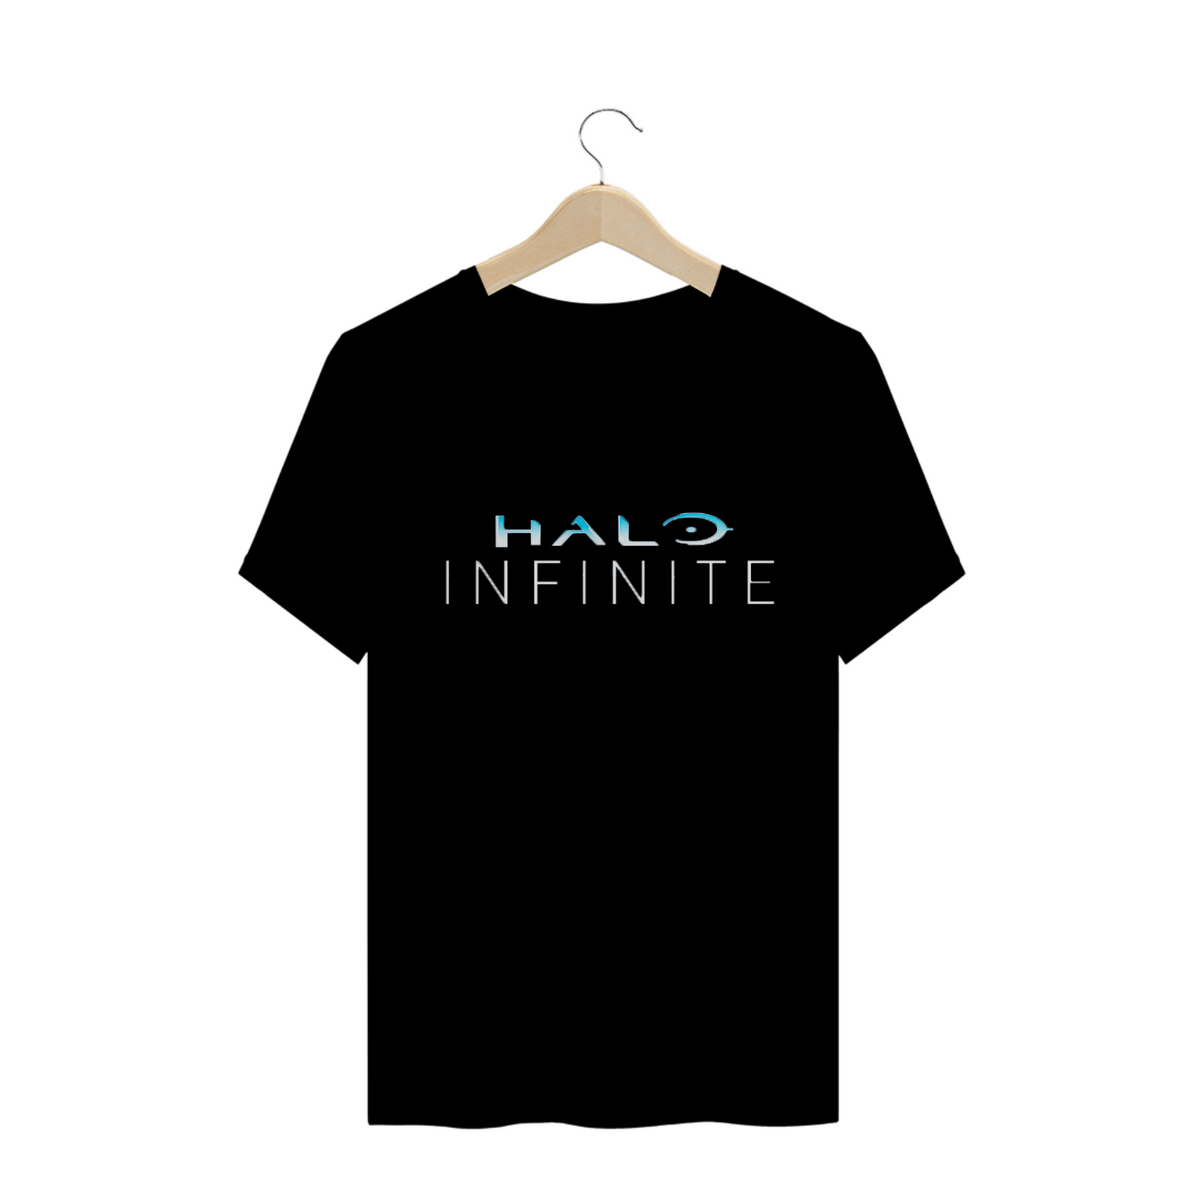 Nome do produto: Halo Infinite